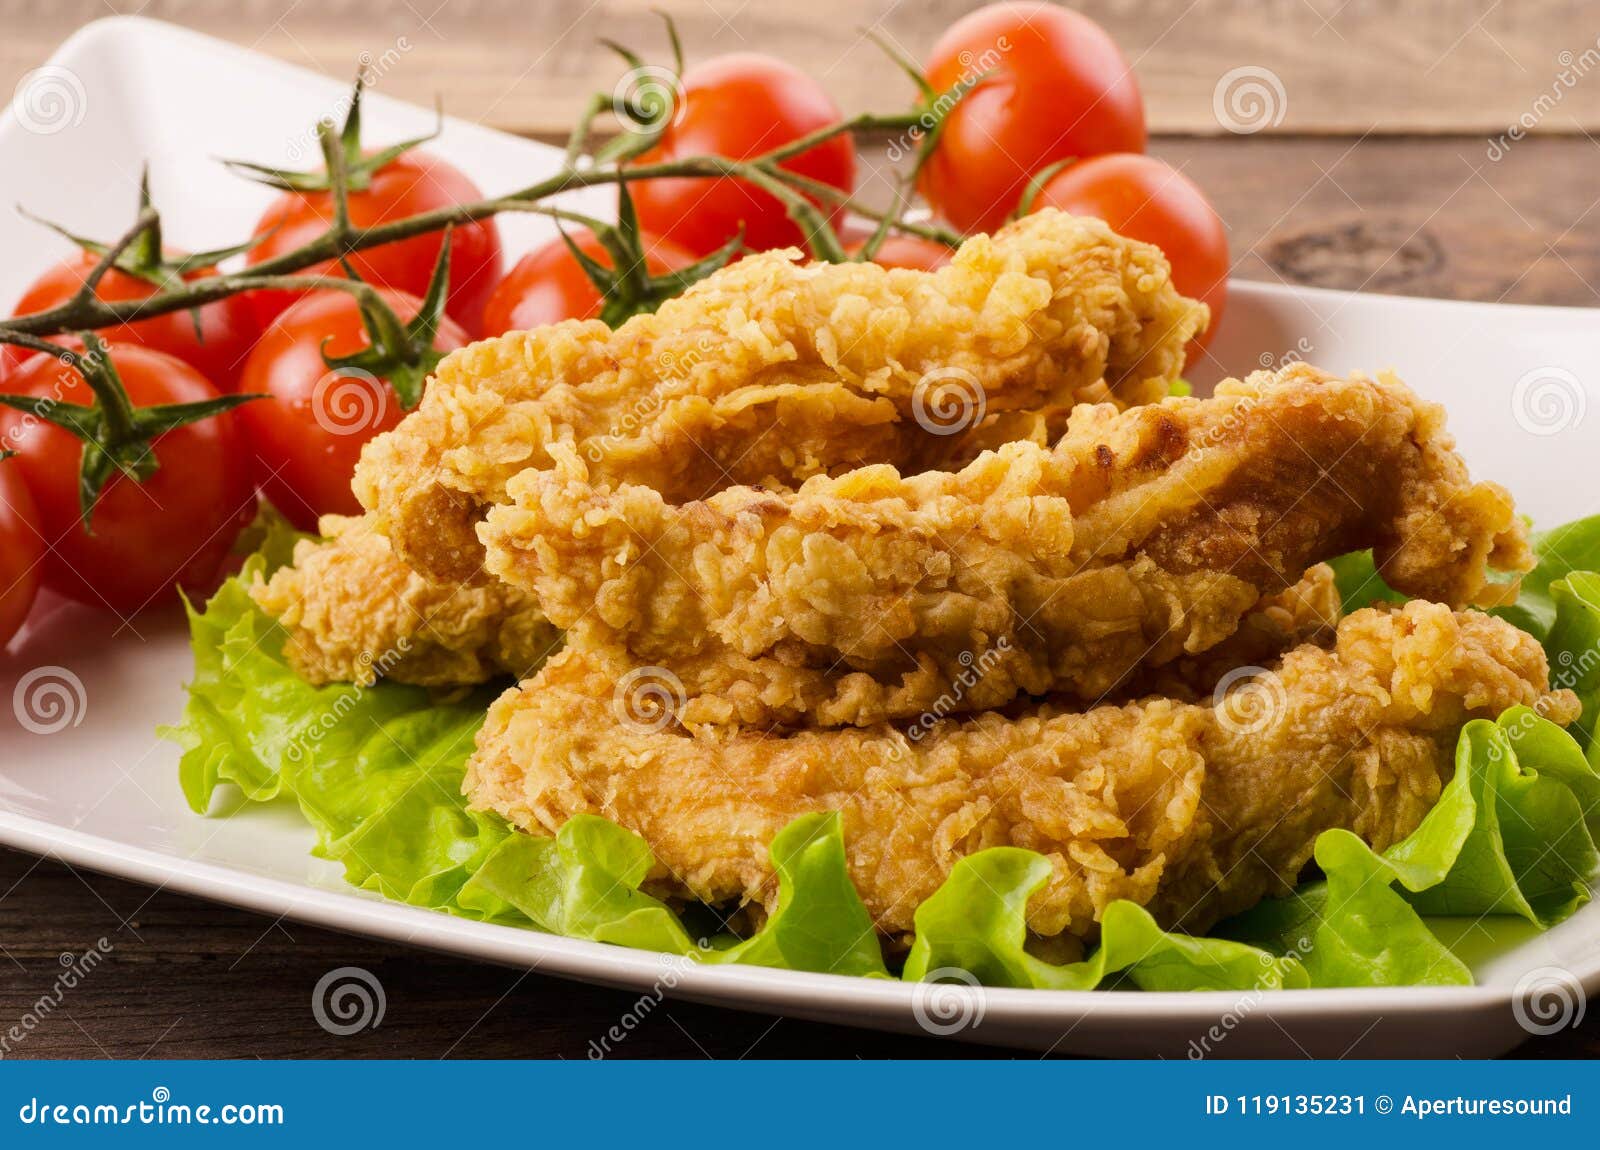 golden fried chicken strips in breading